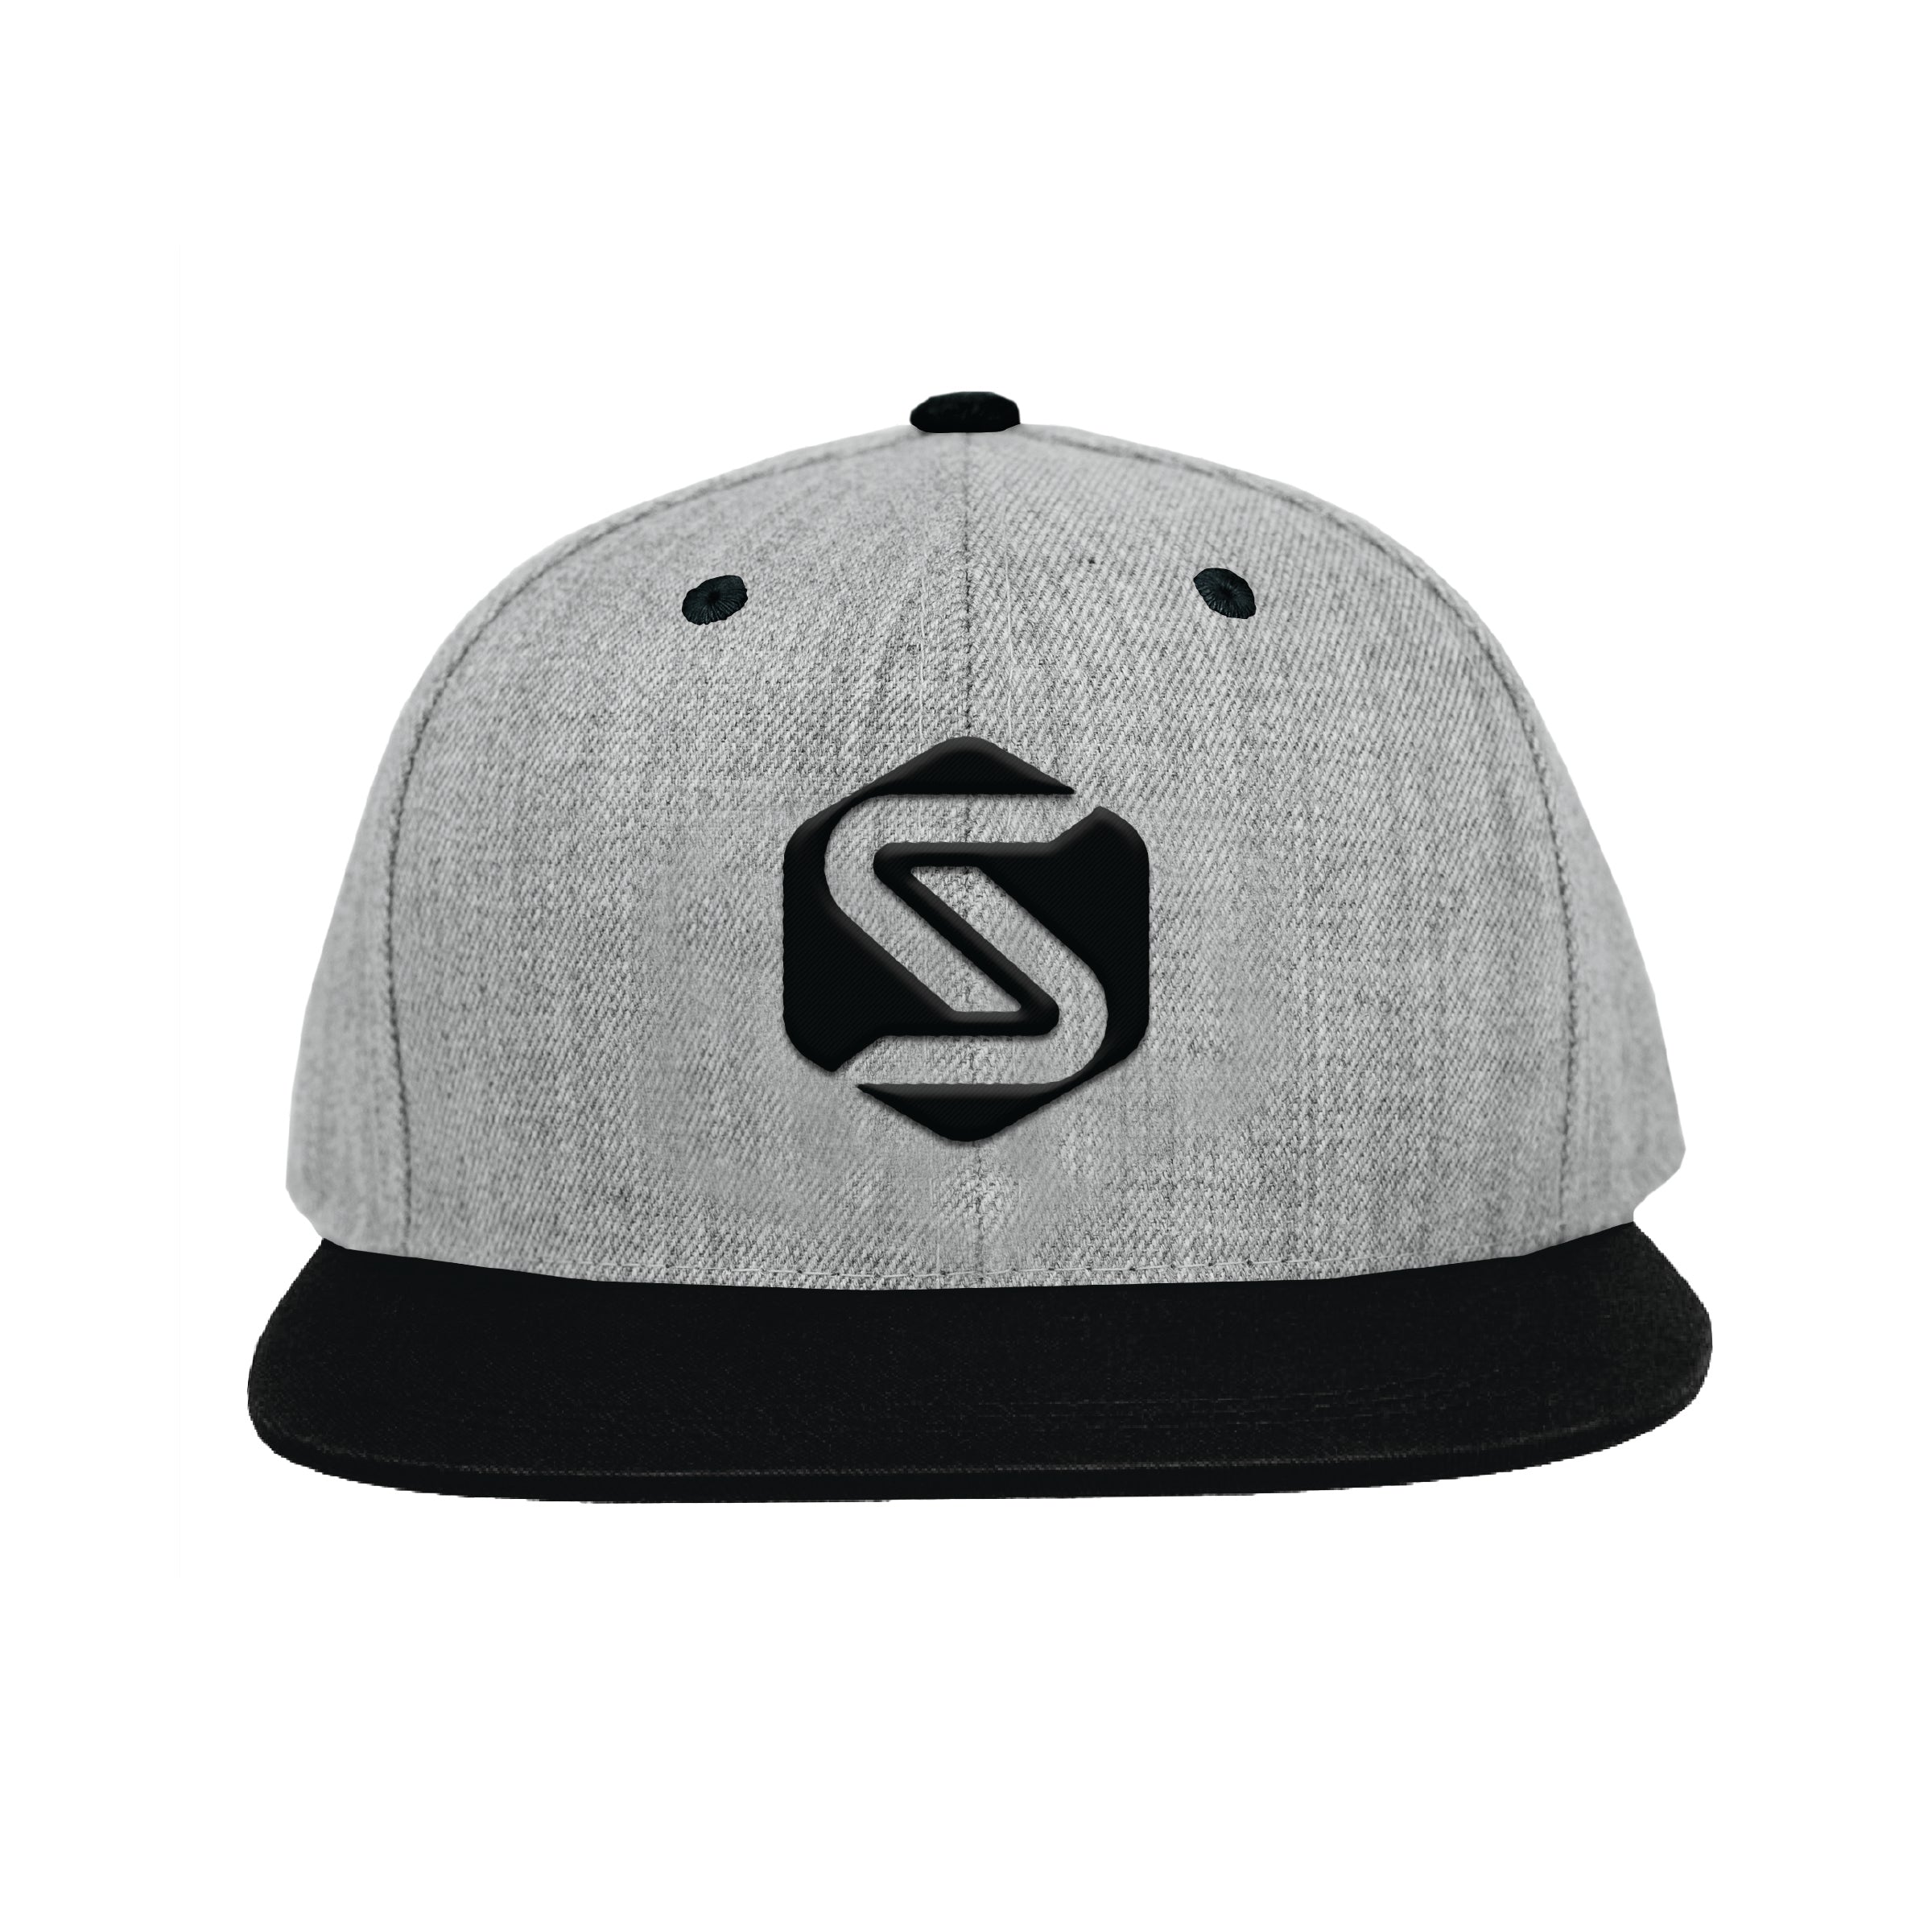 Louisville Slugger Baseball Cap - Gray and White